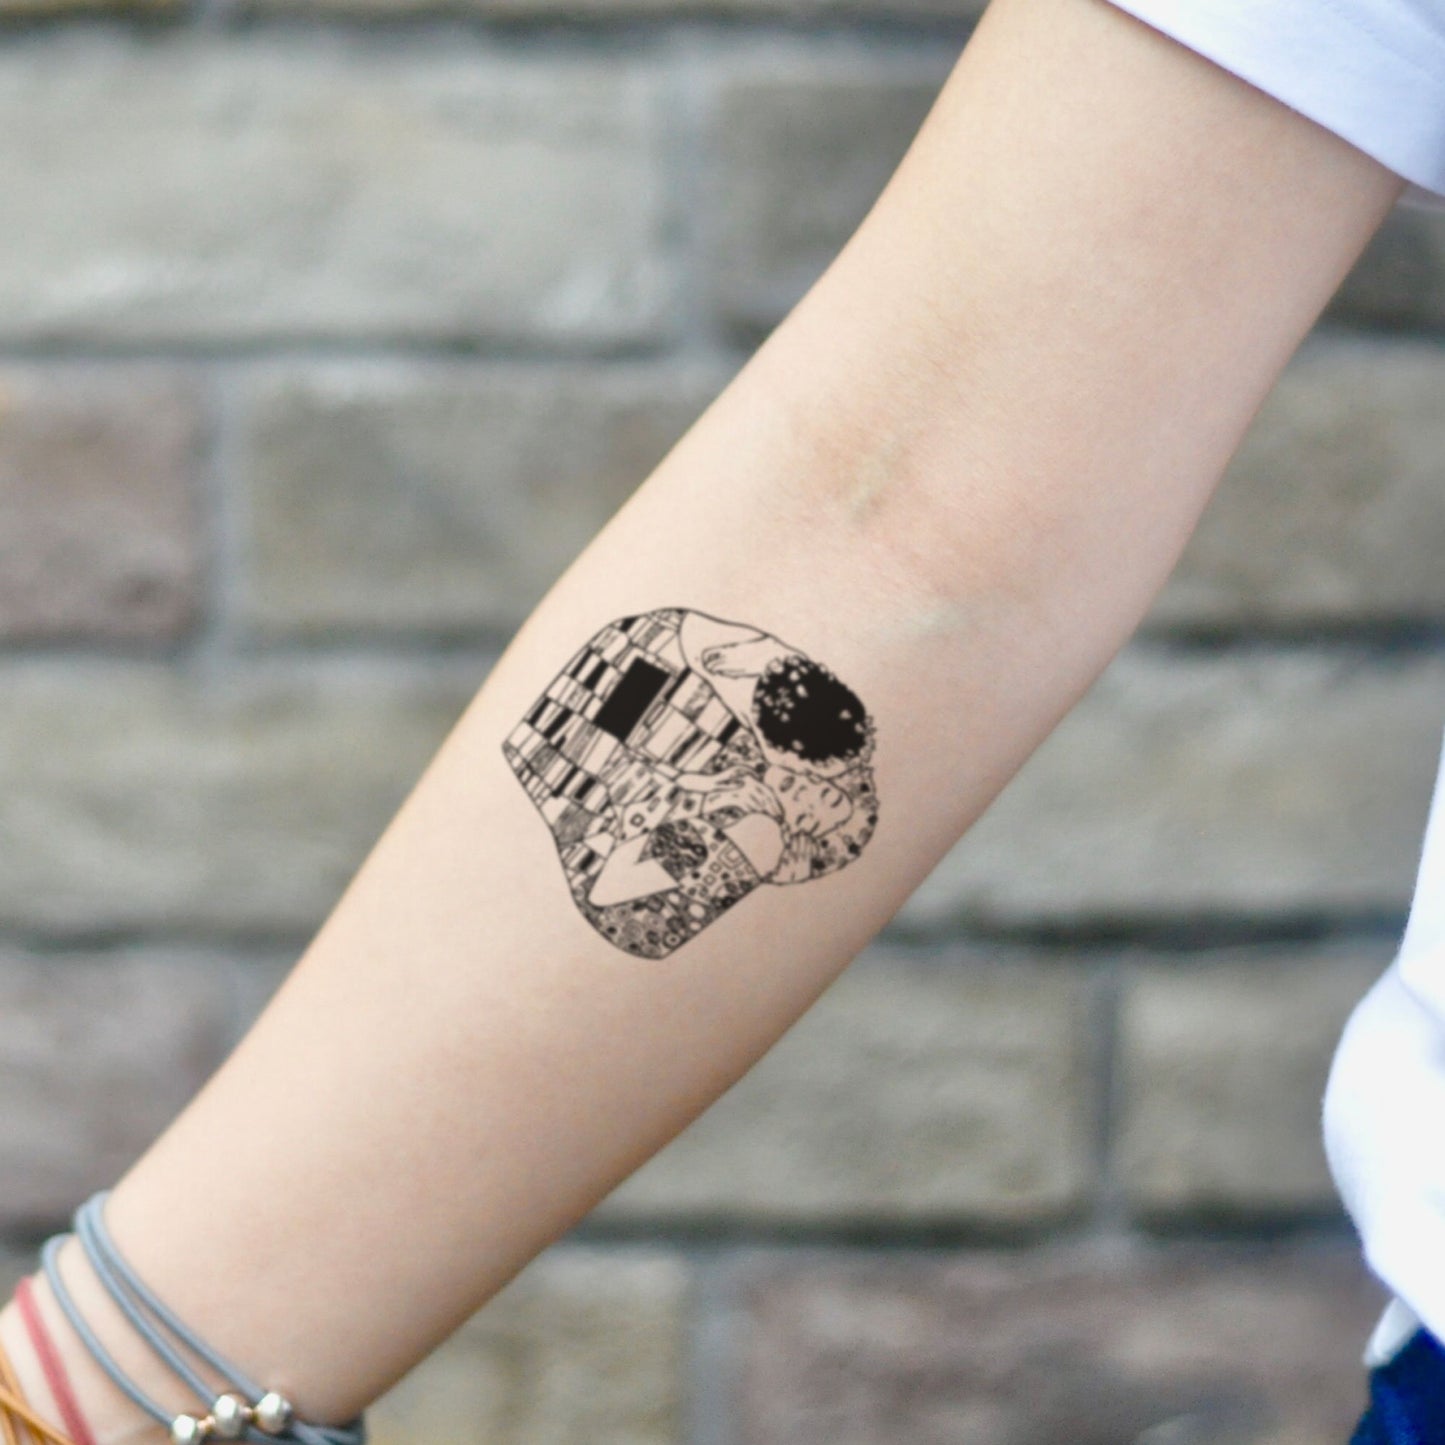 fake small gustav klimt the kiss illustrative temporary tattoo sticker design idea on inner arm